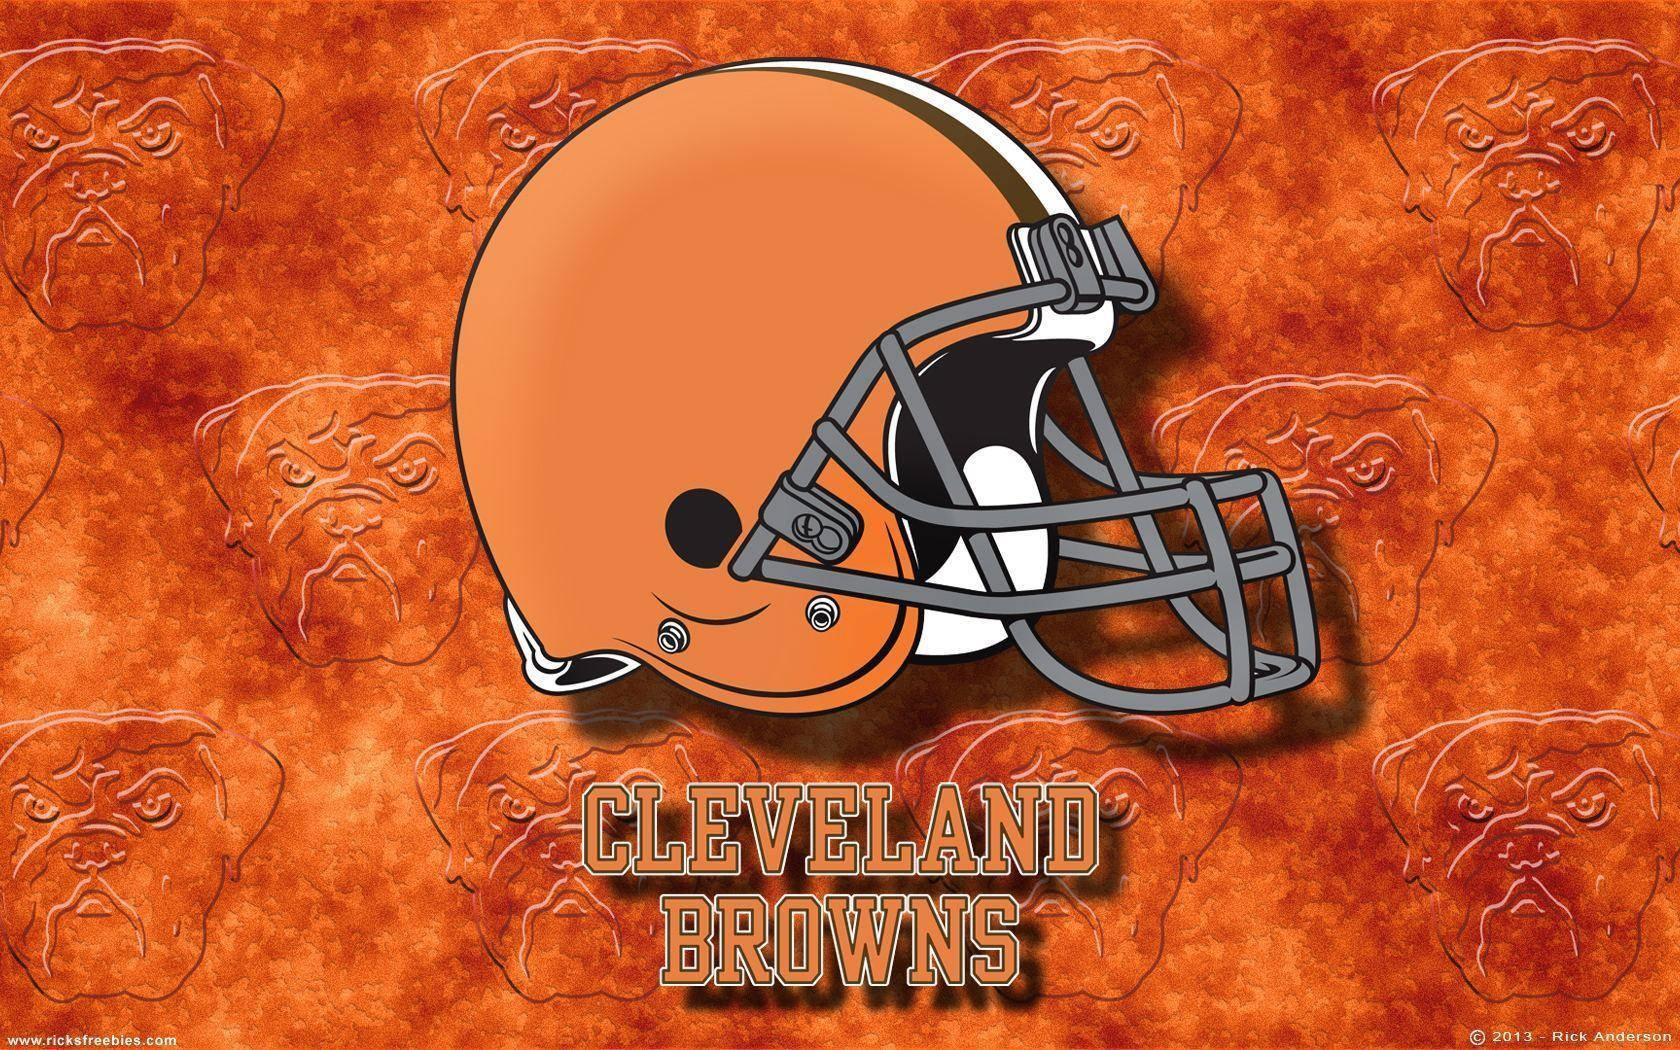 American Football Team Cleveland Browns Wallpaper